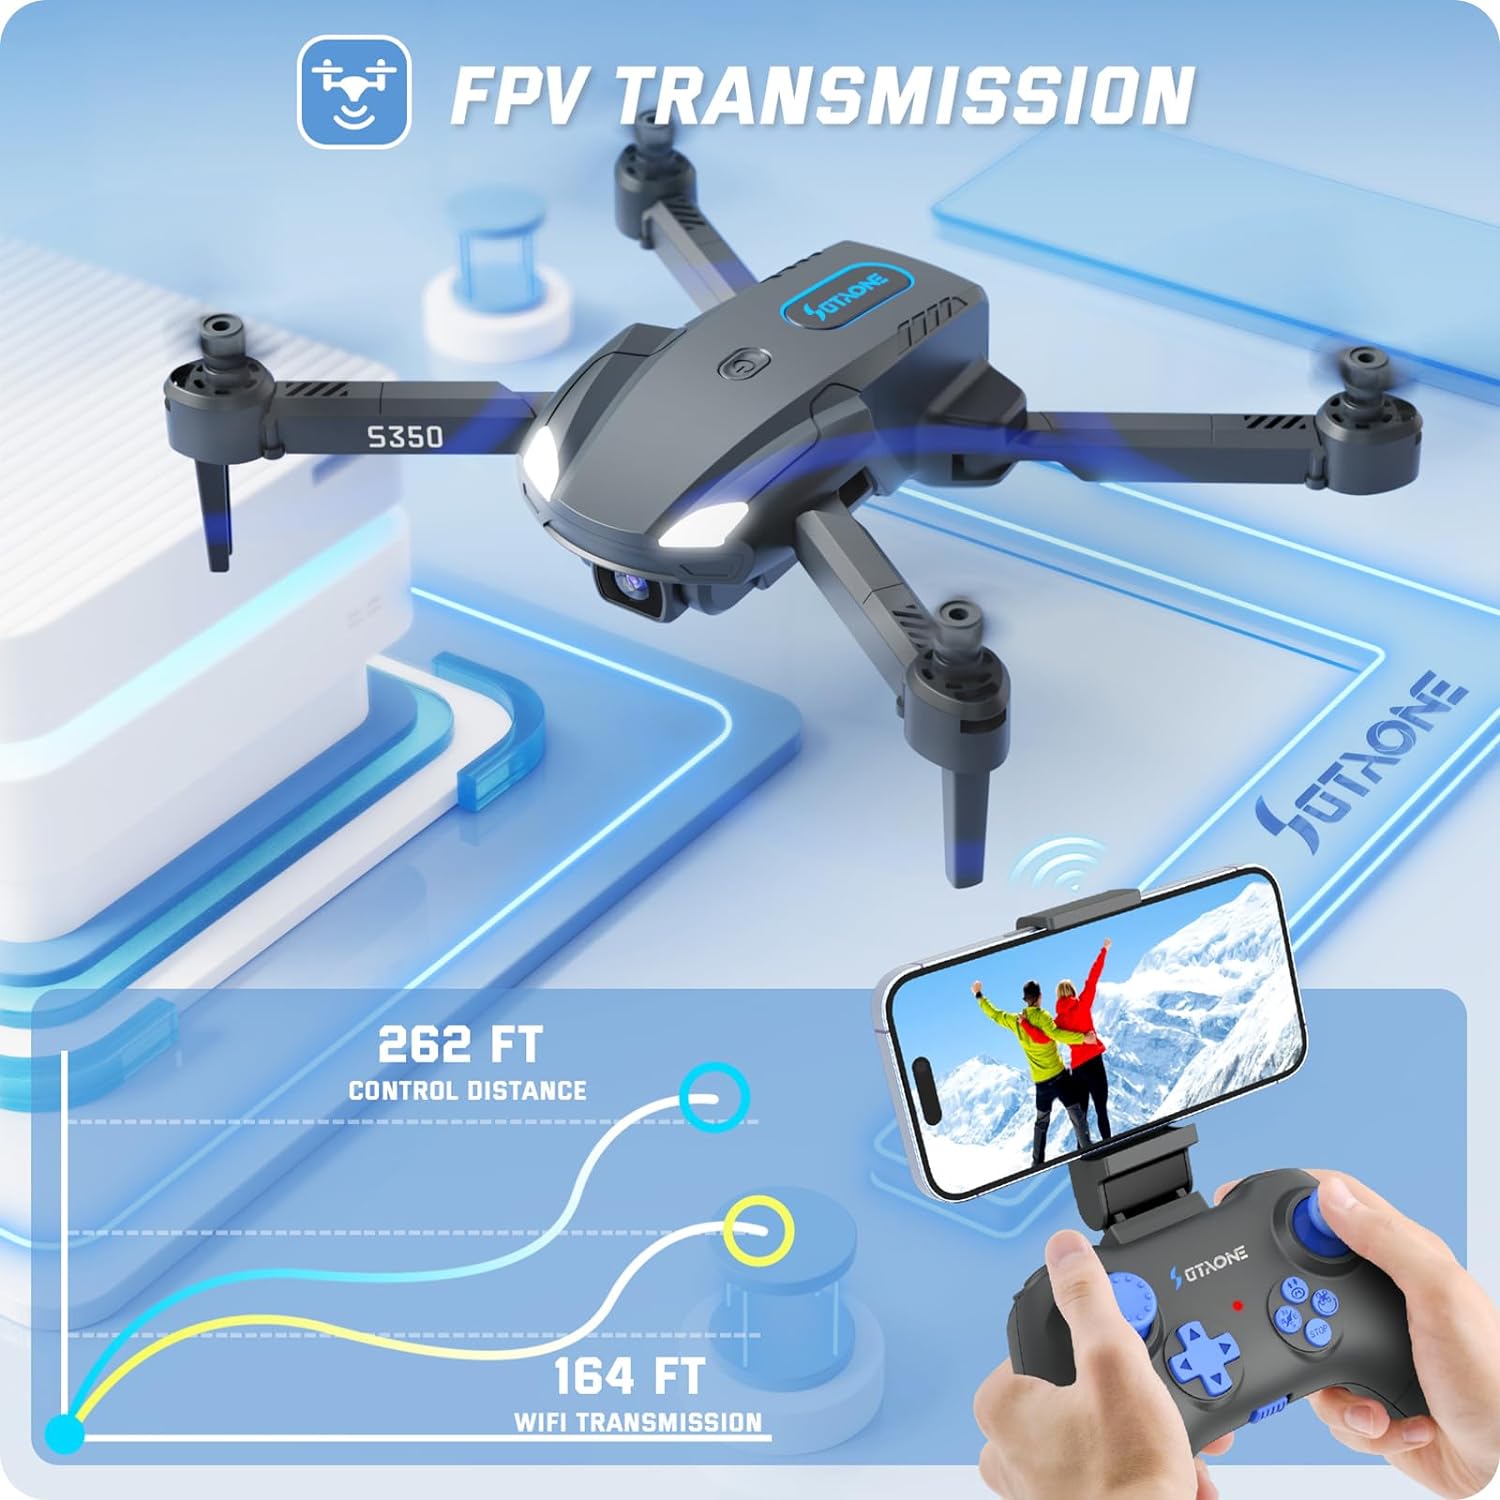 SOTAONE S350 Drone, FPV TRANSMISSION 5350 262 FT control